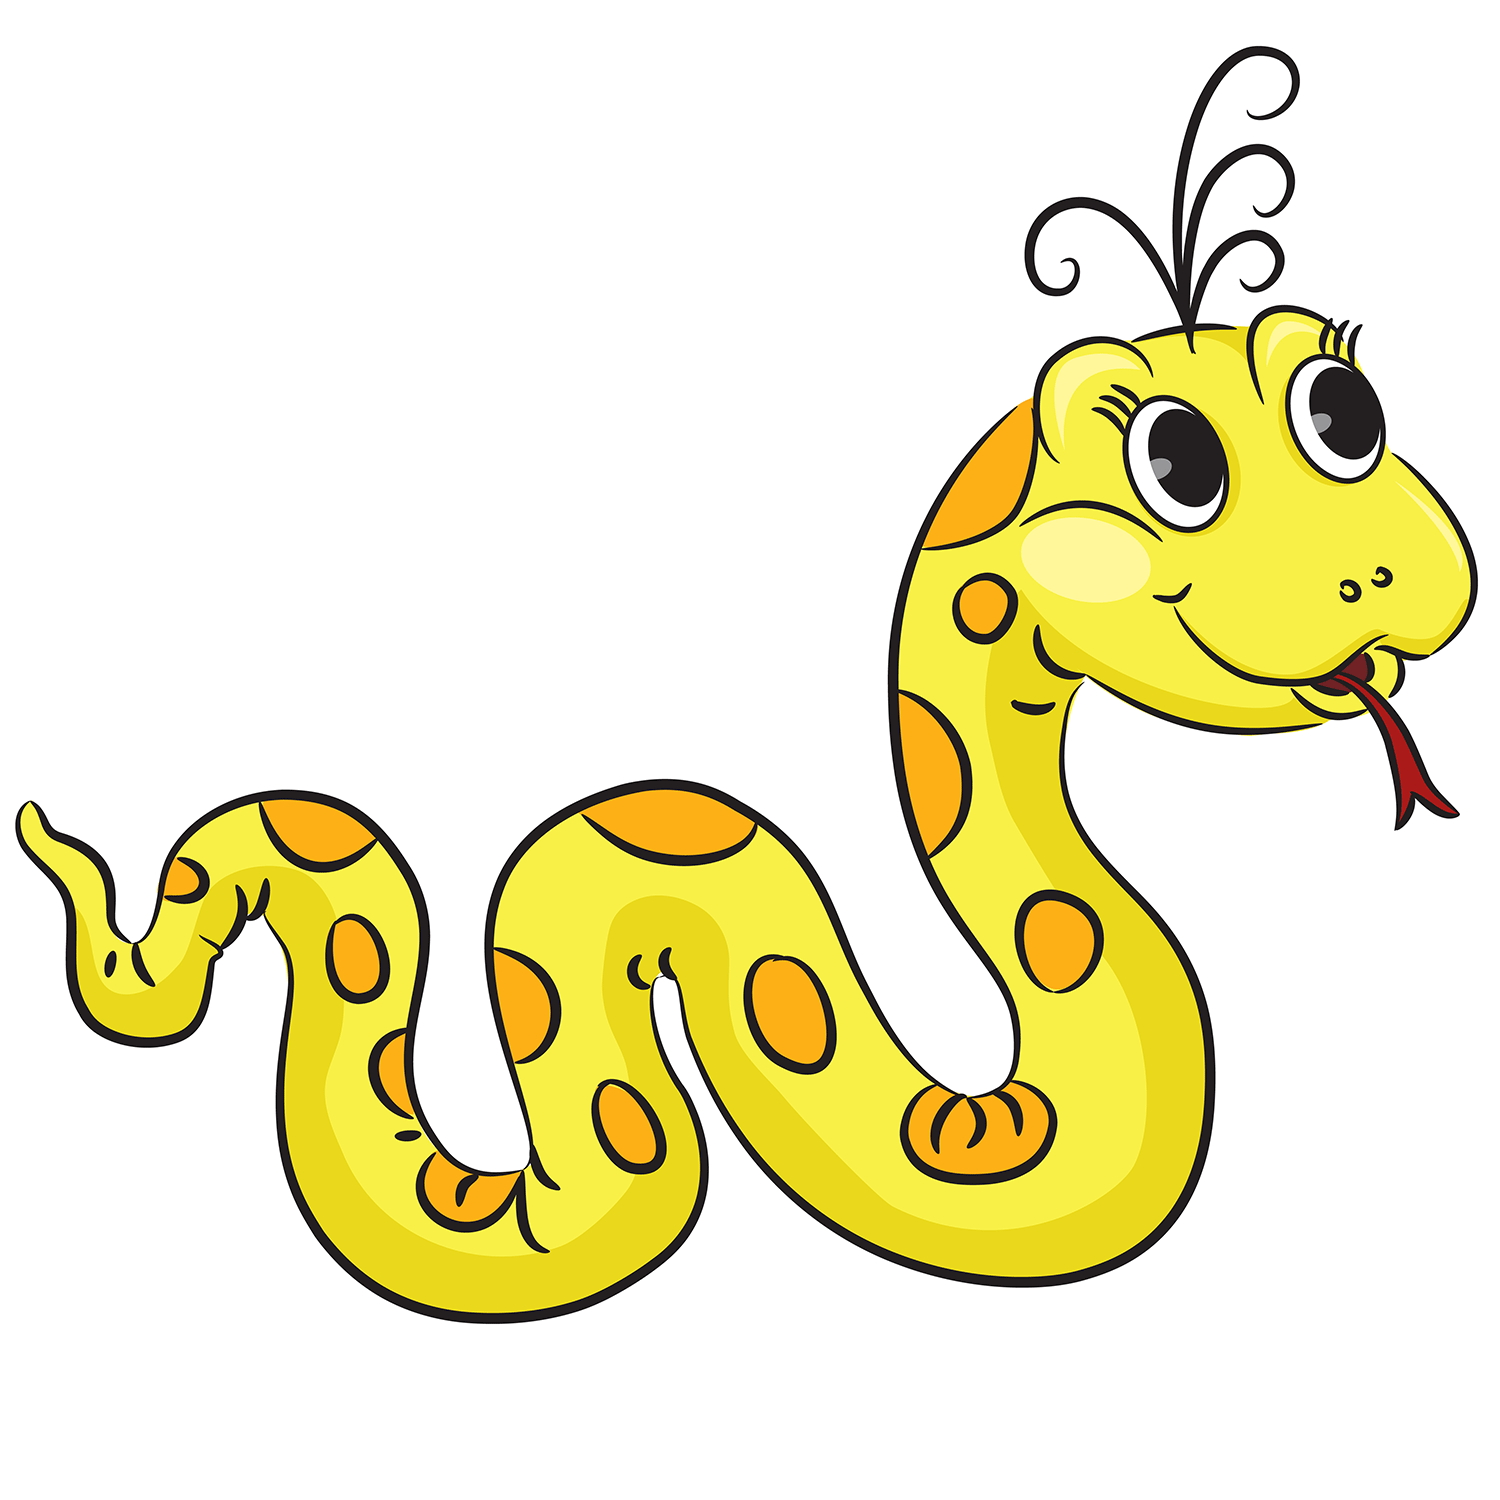 Snake Cartoon Clip Art